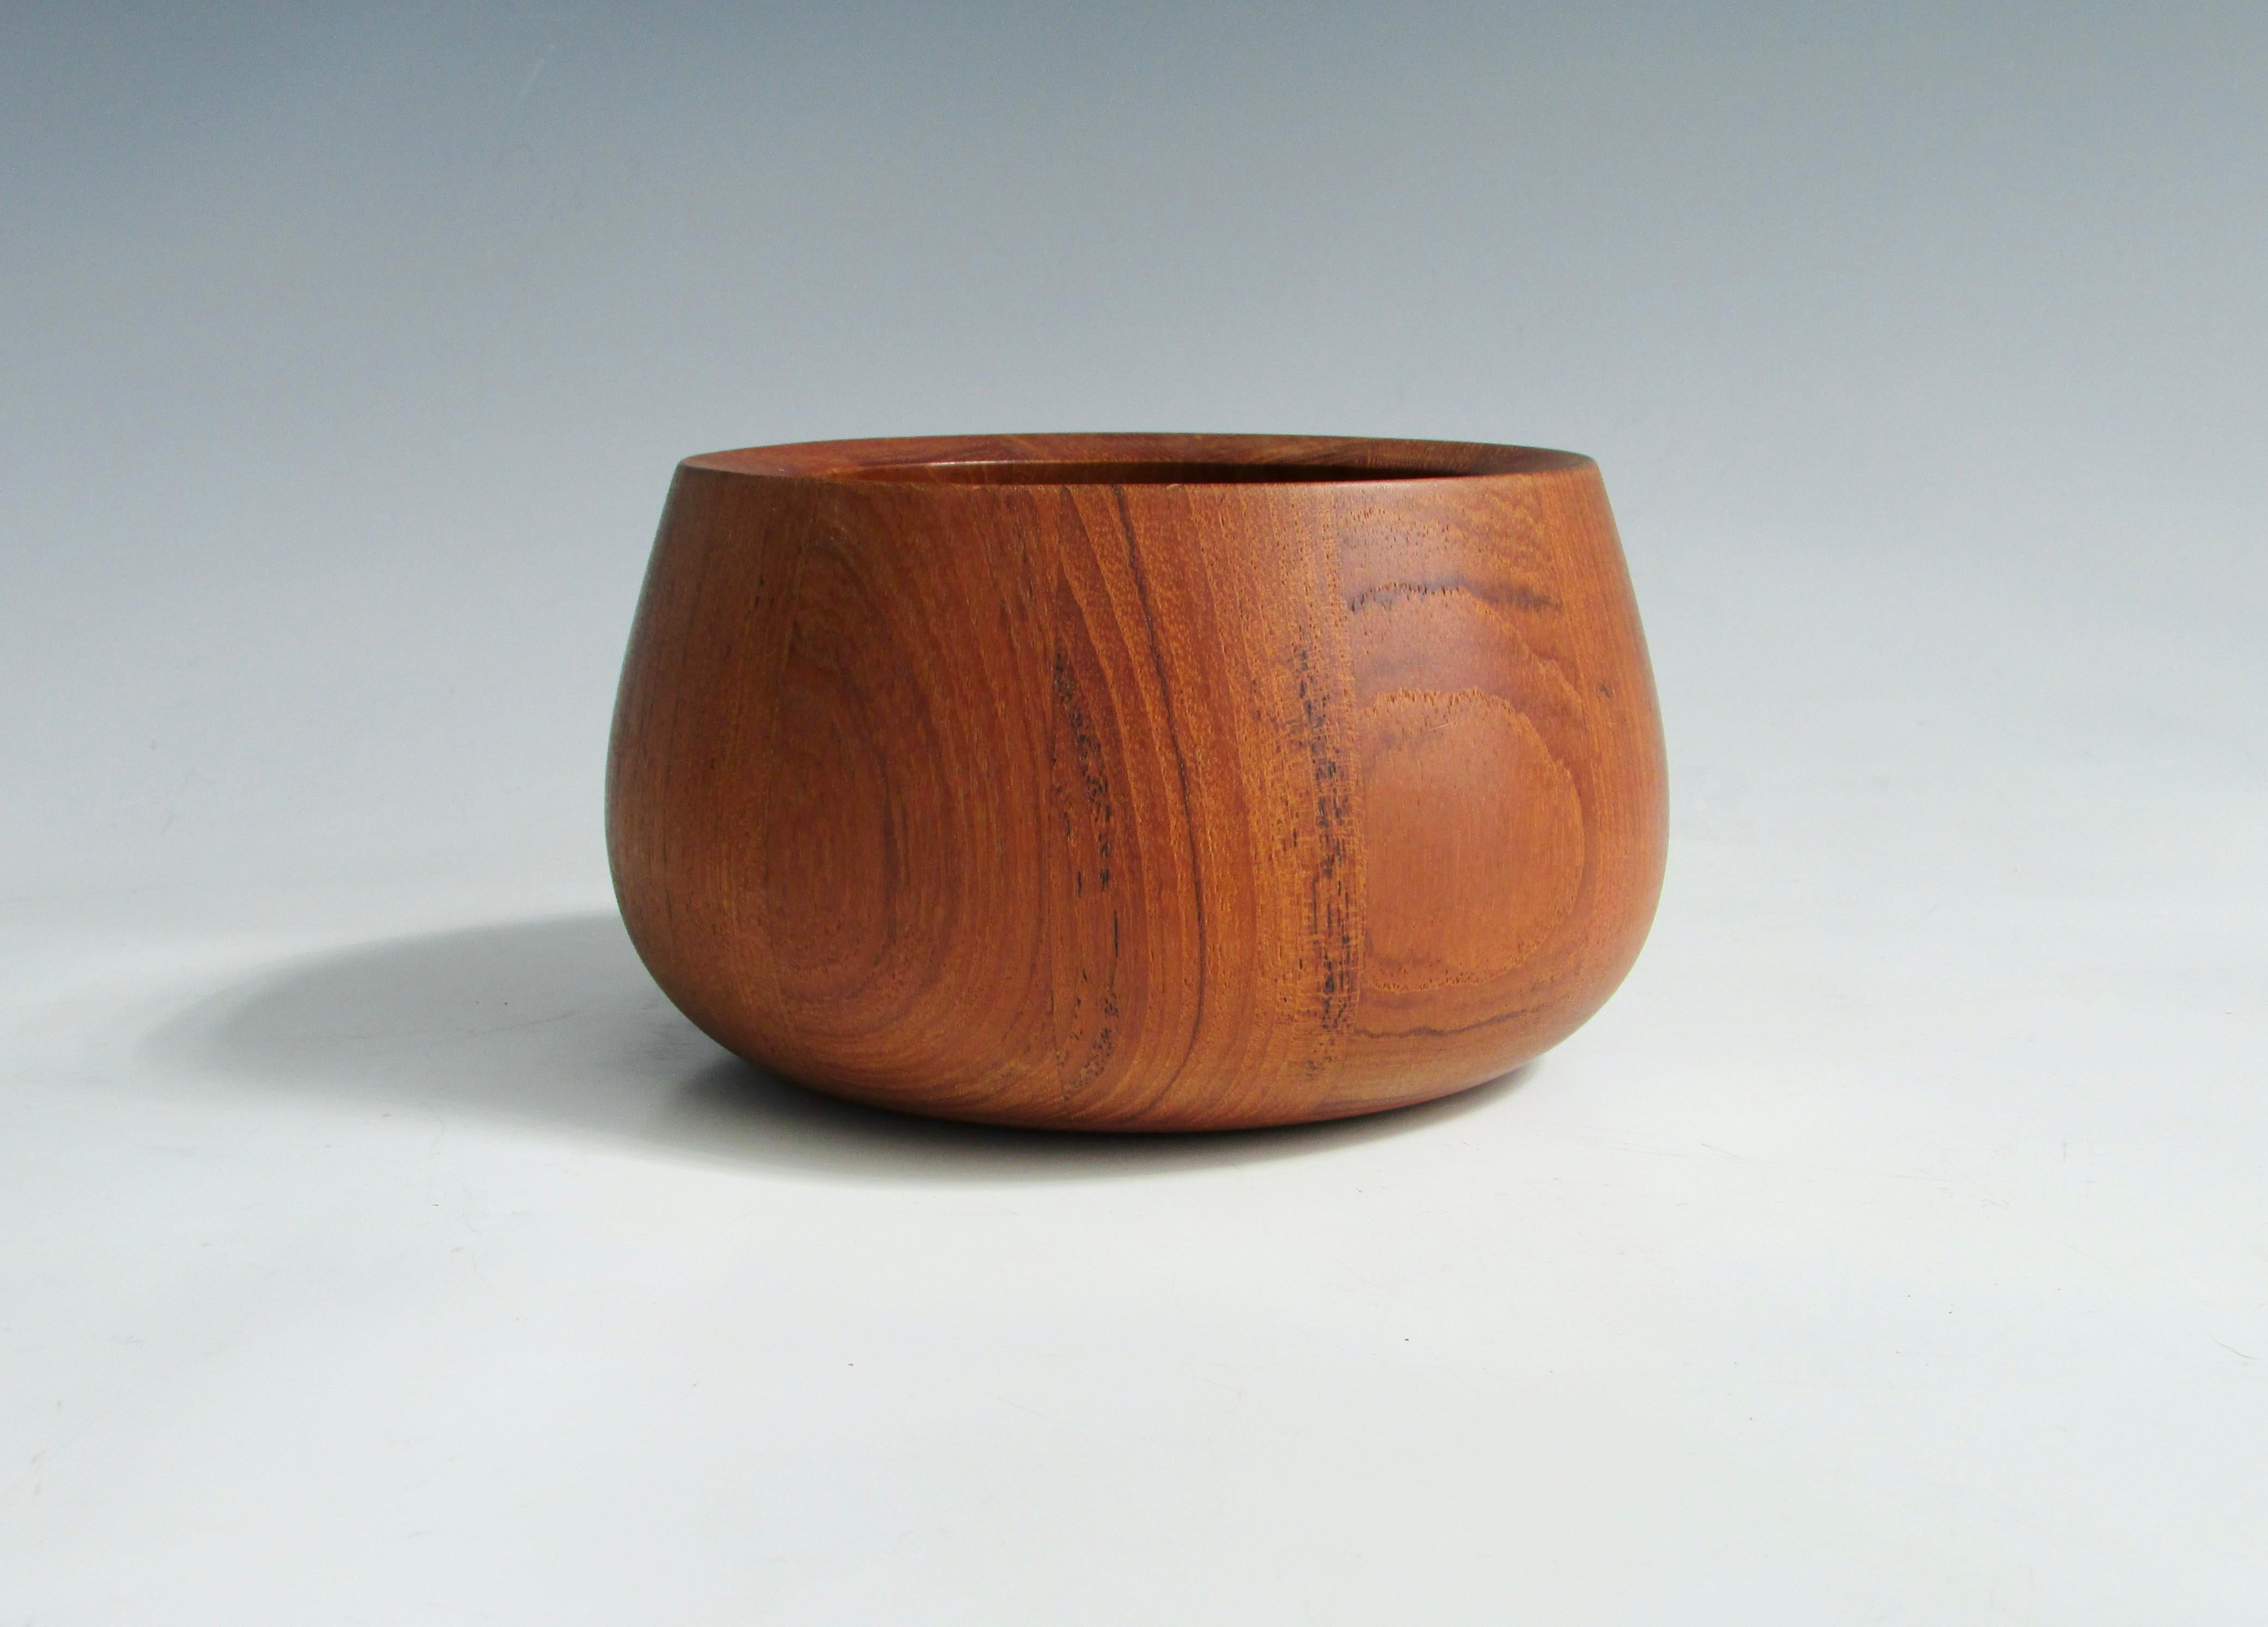 Smaller size Dansk bowl. One I have never seen. Turned teak wood. Fine condition possibly never used. Marked JHQ Dansk Denmark.